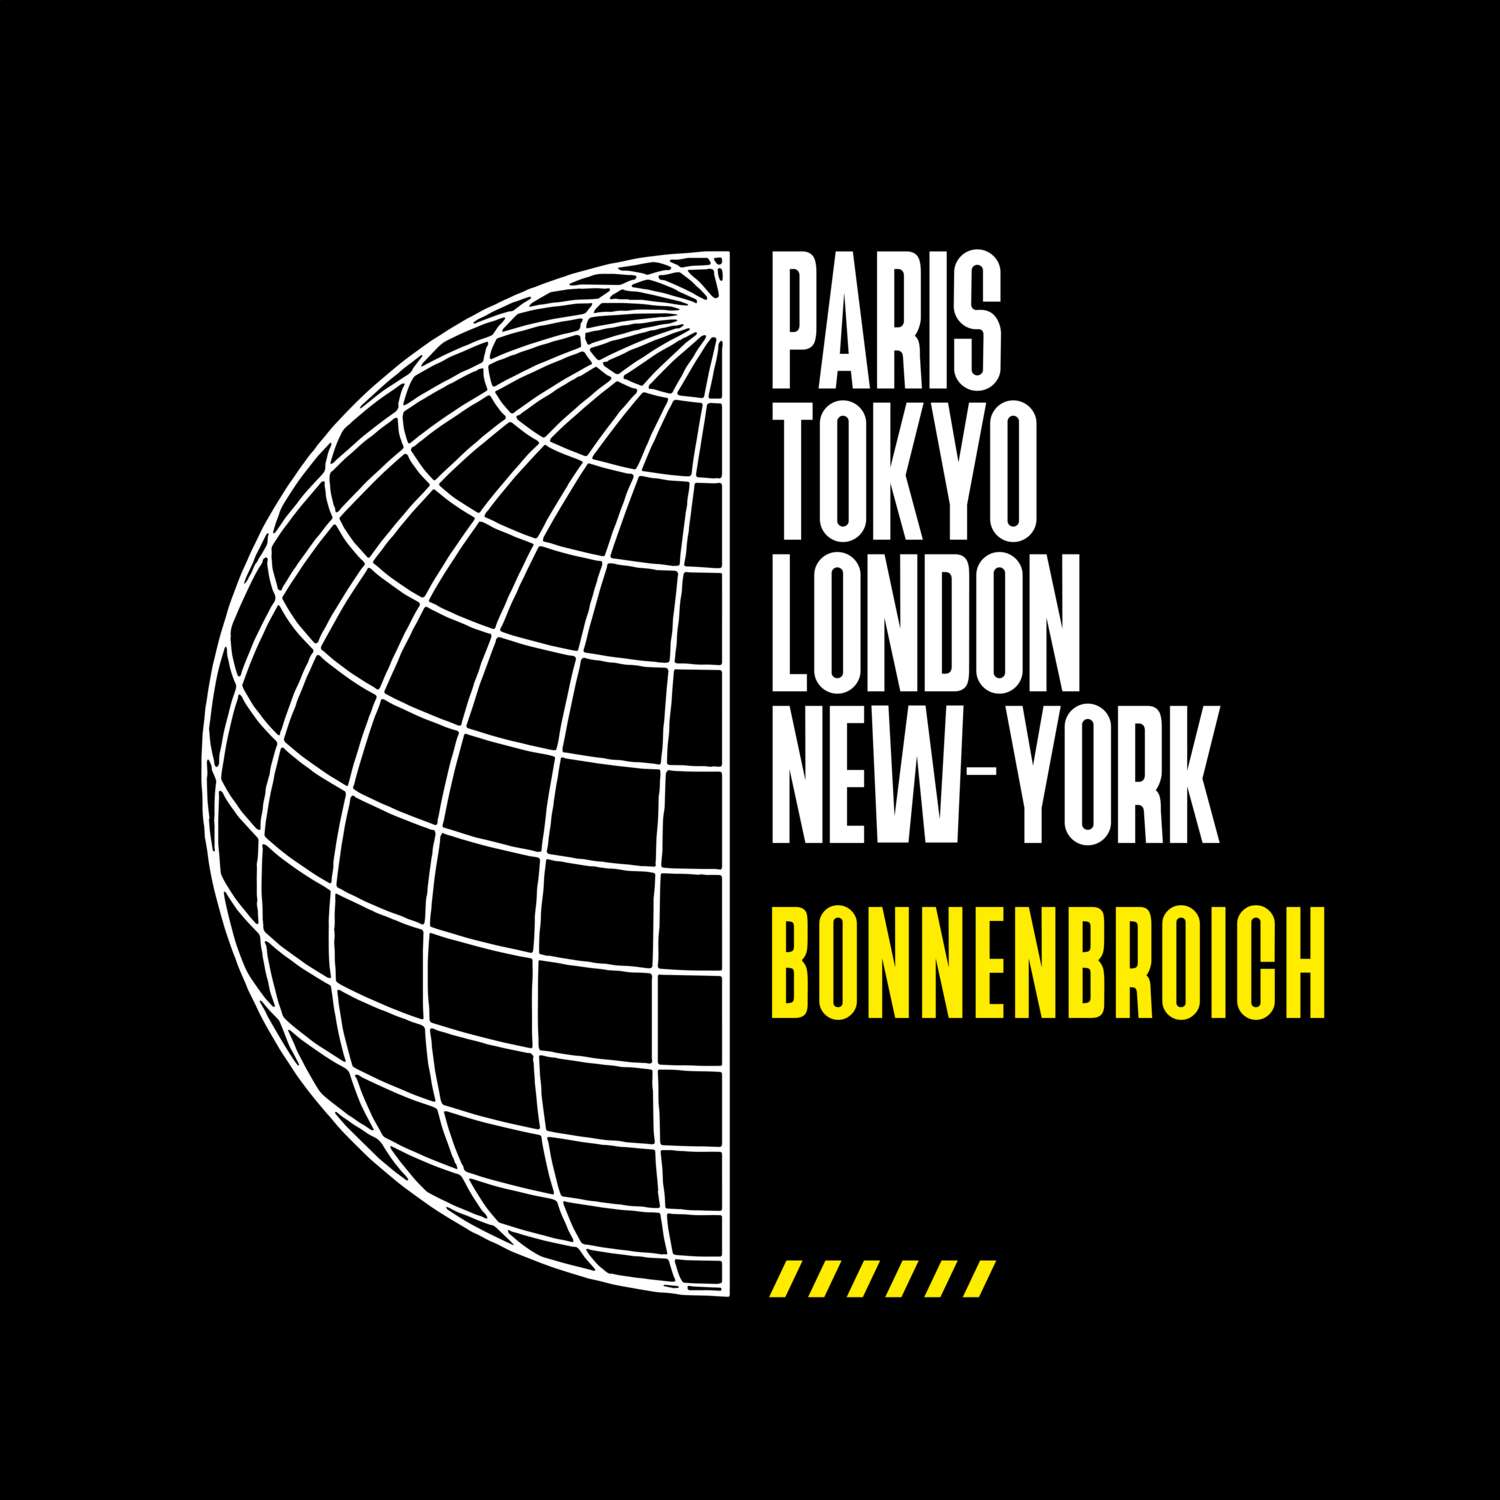 Bonnenbroich T-Shirt »Paris Tokyo London«